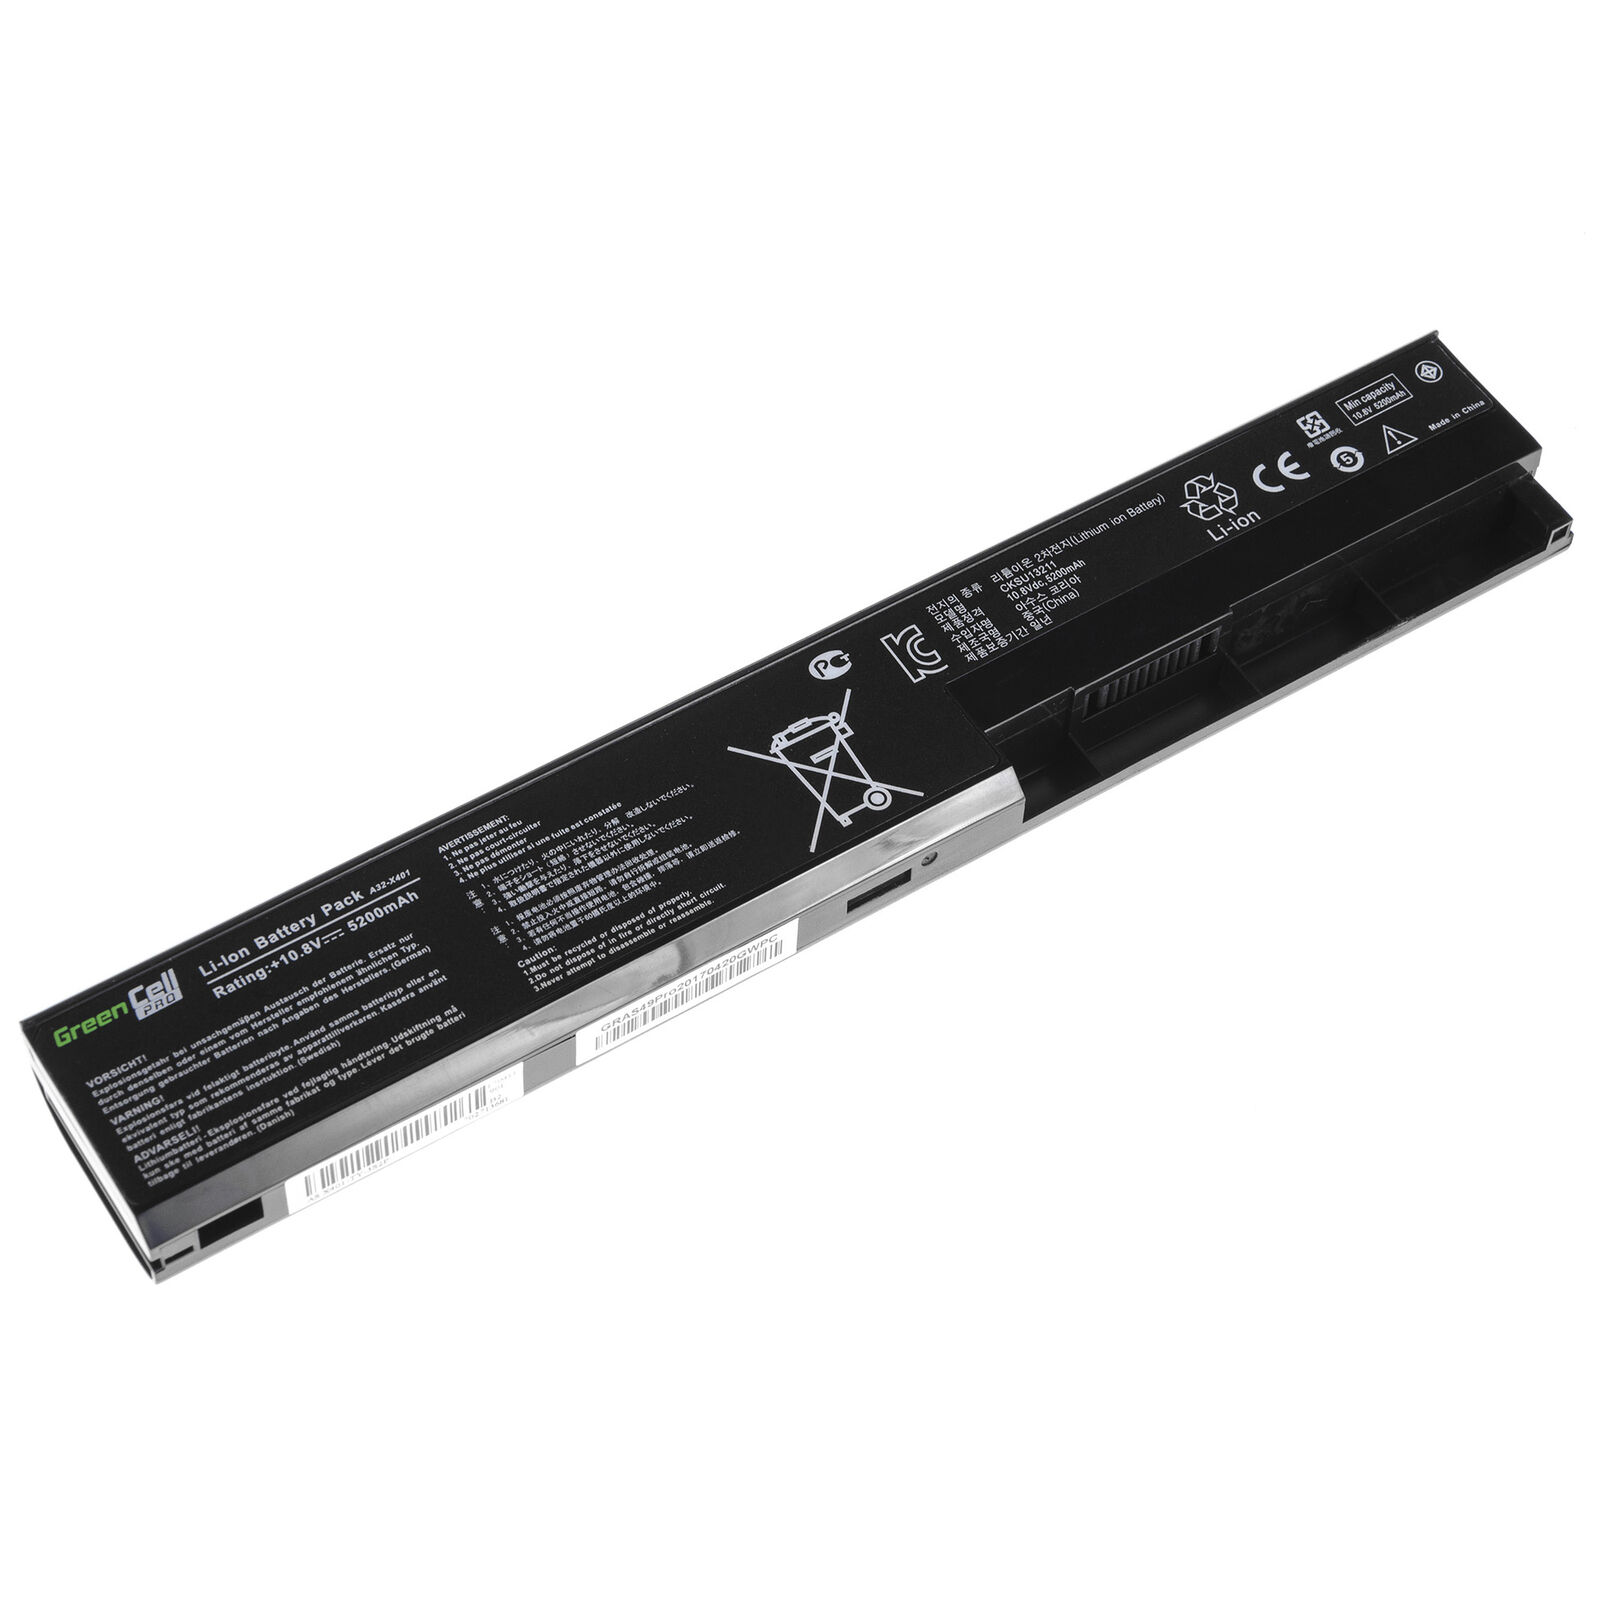 Bateria para Asus X301 X301A X301U X501 X501A X501U A31-X401 A41-X401 – Clique na imagem para fechar